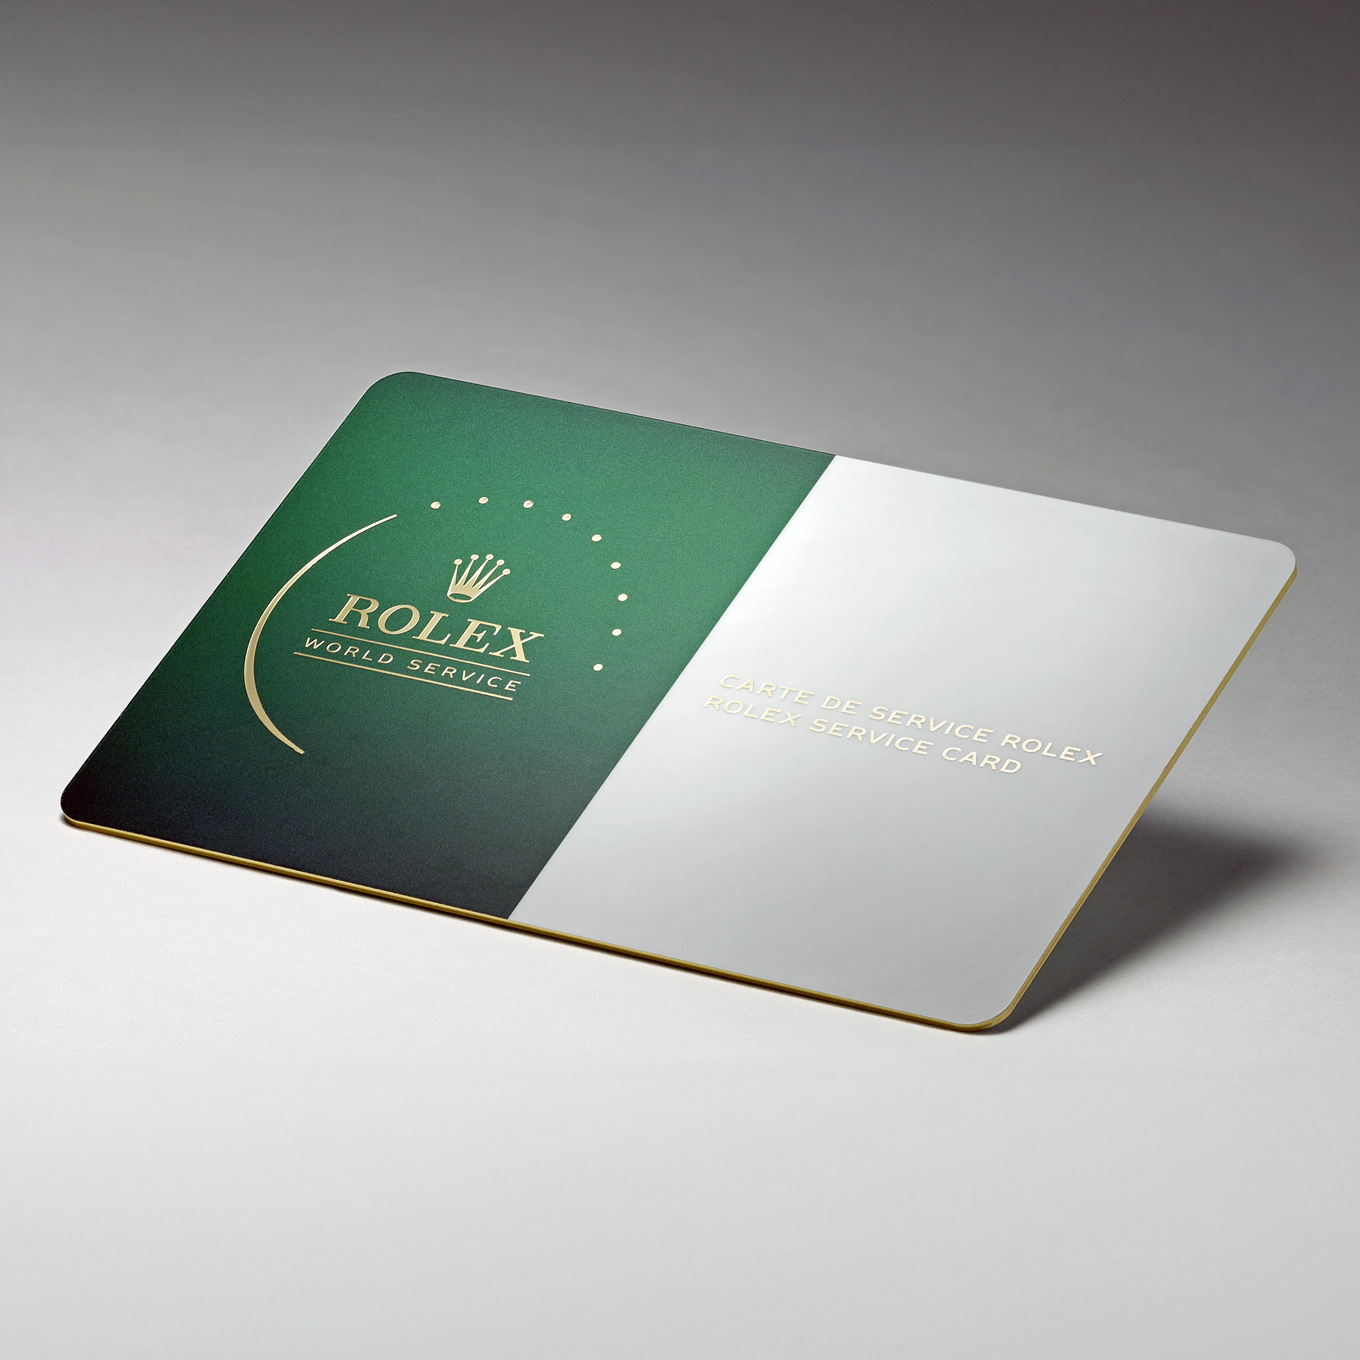 A Rolex international service guarantee card